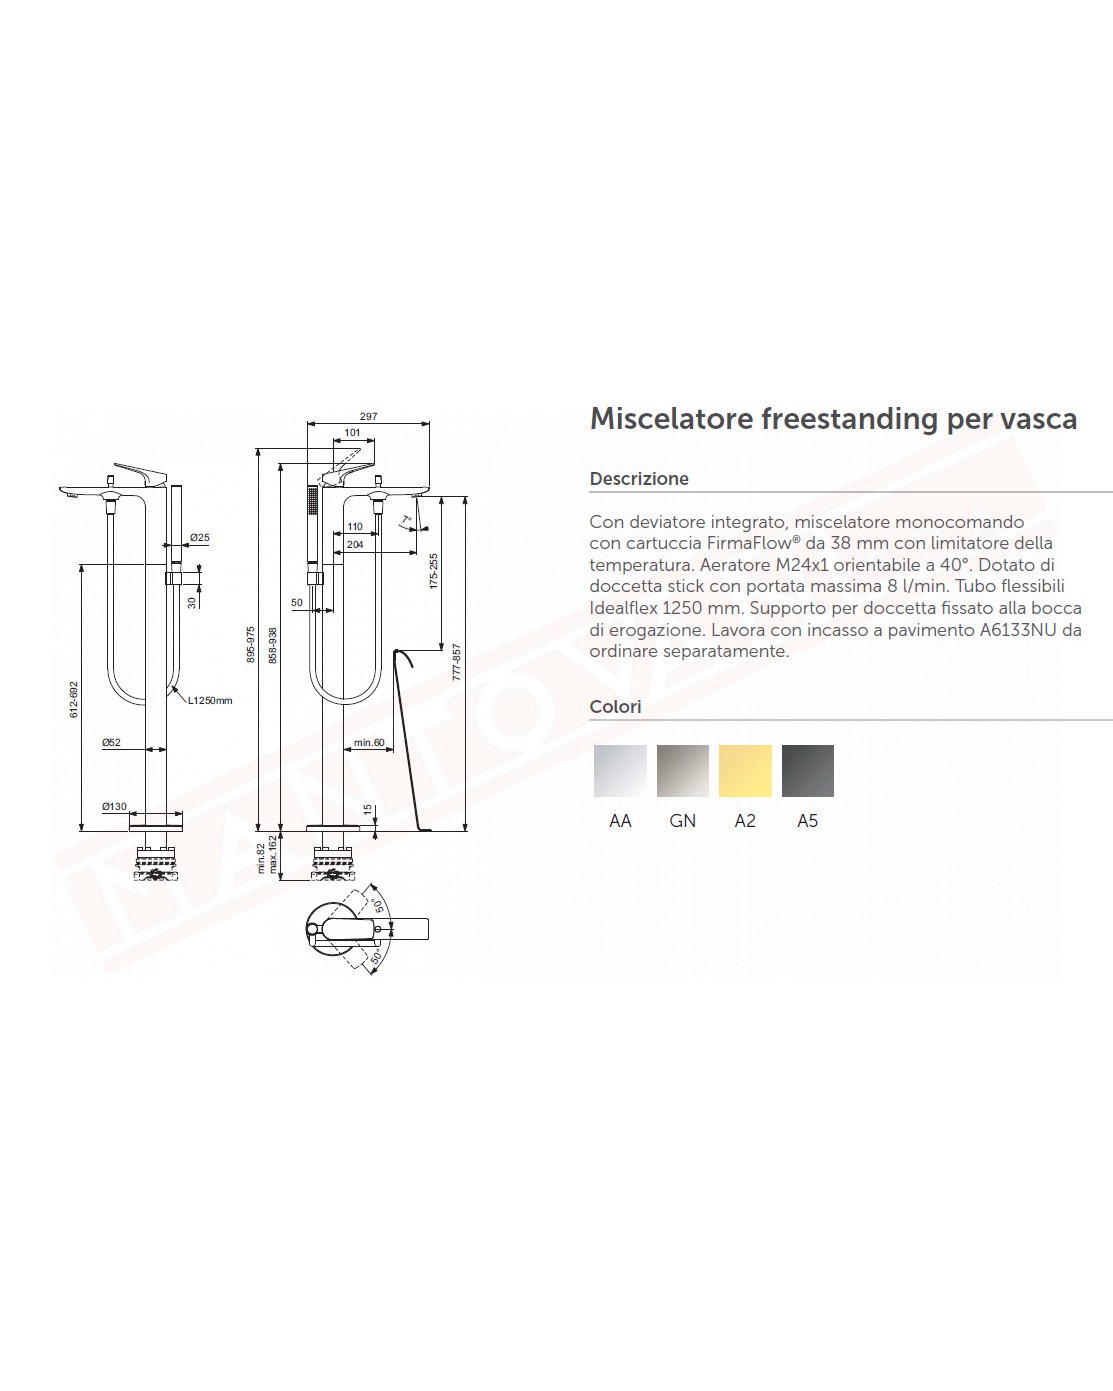 La Dolce Vita Ideal Standard miscelatore da terra per vasca freestanding sporgenza bocca 204 mm